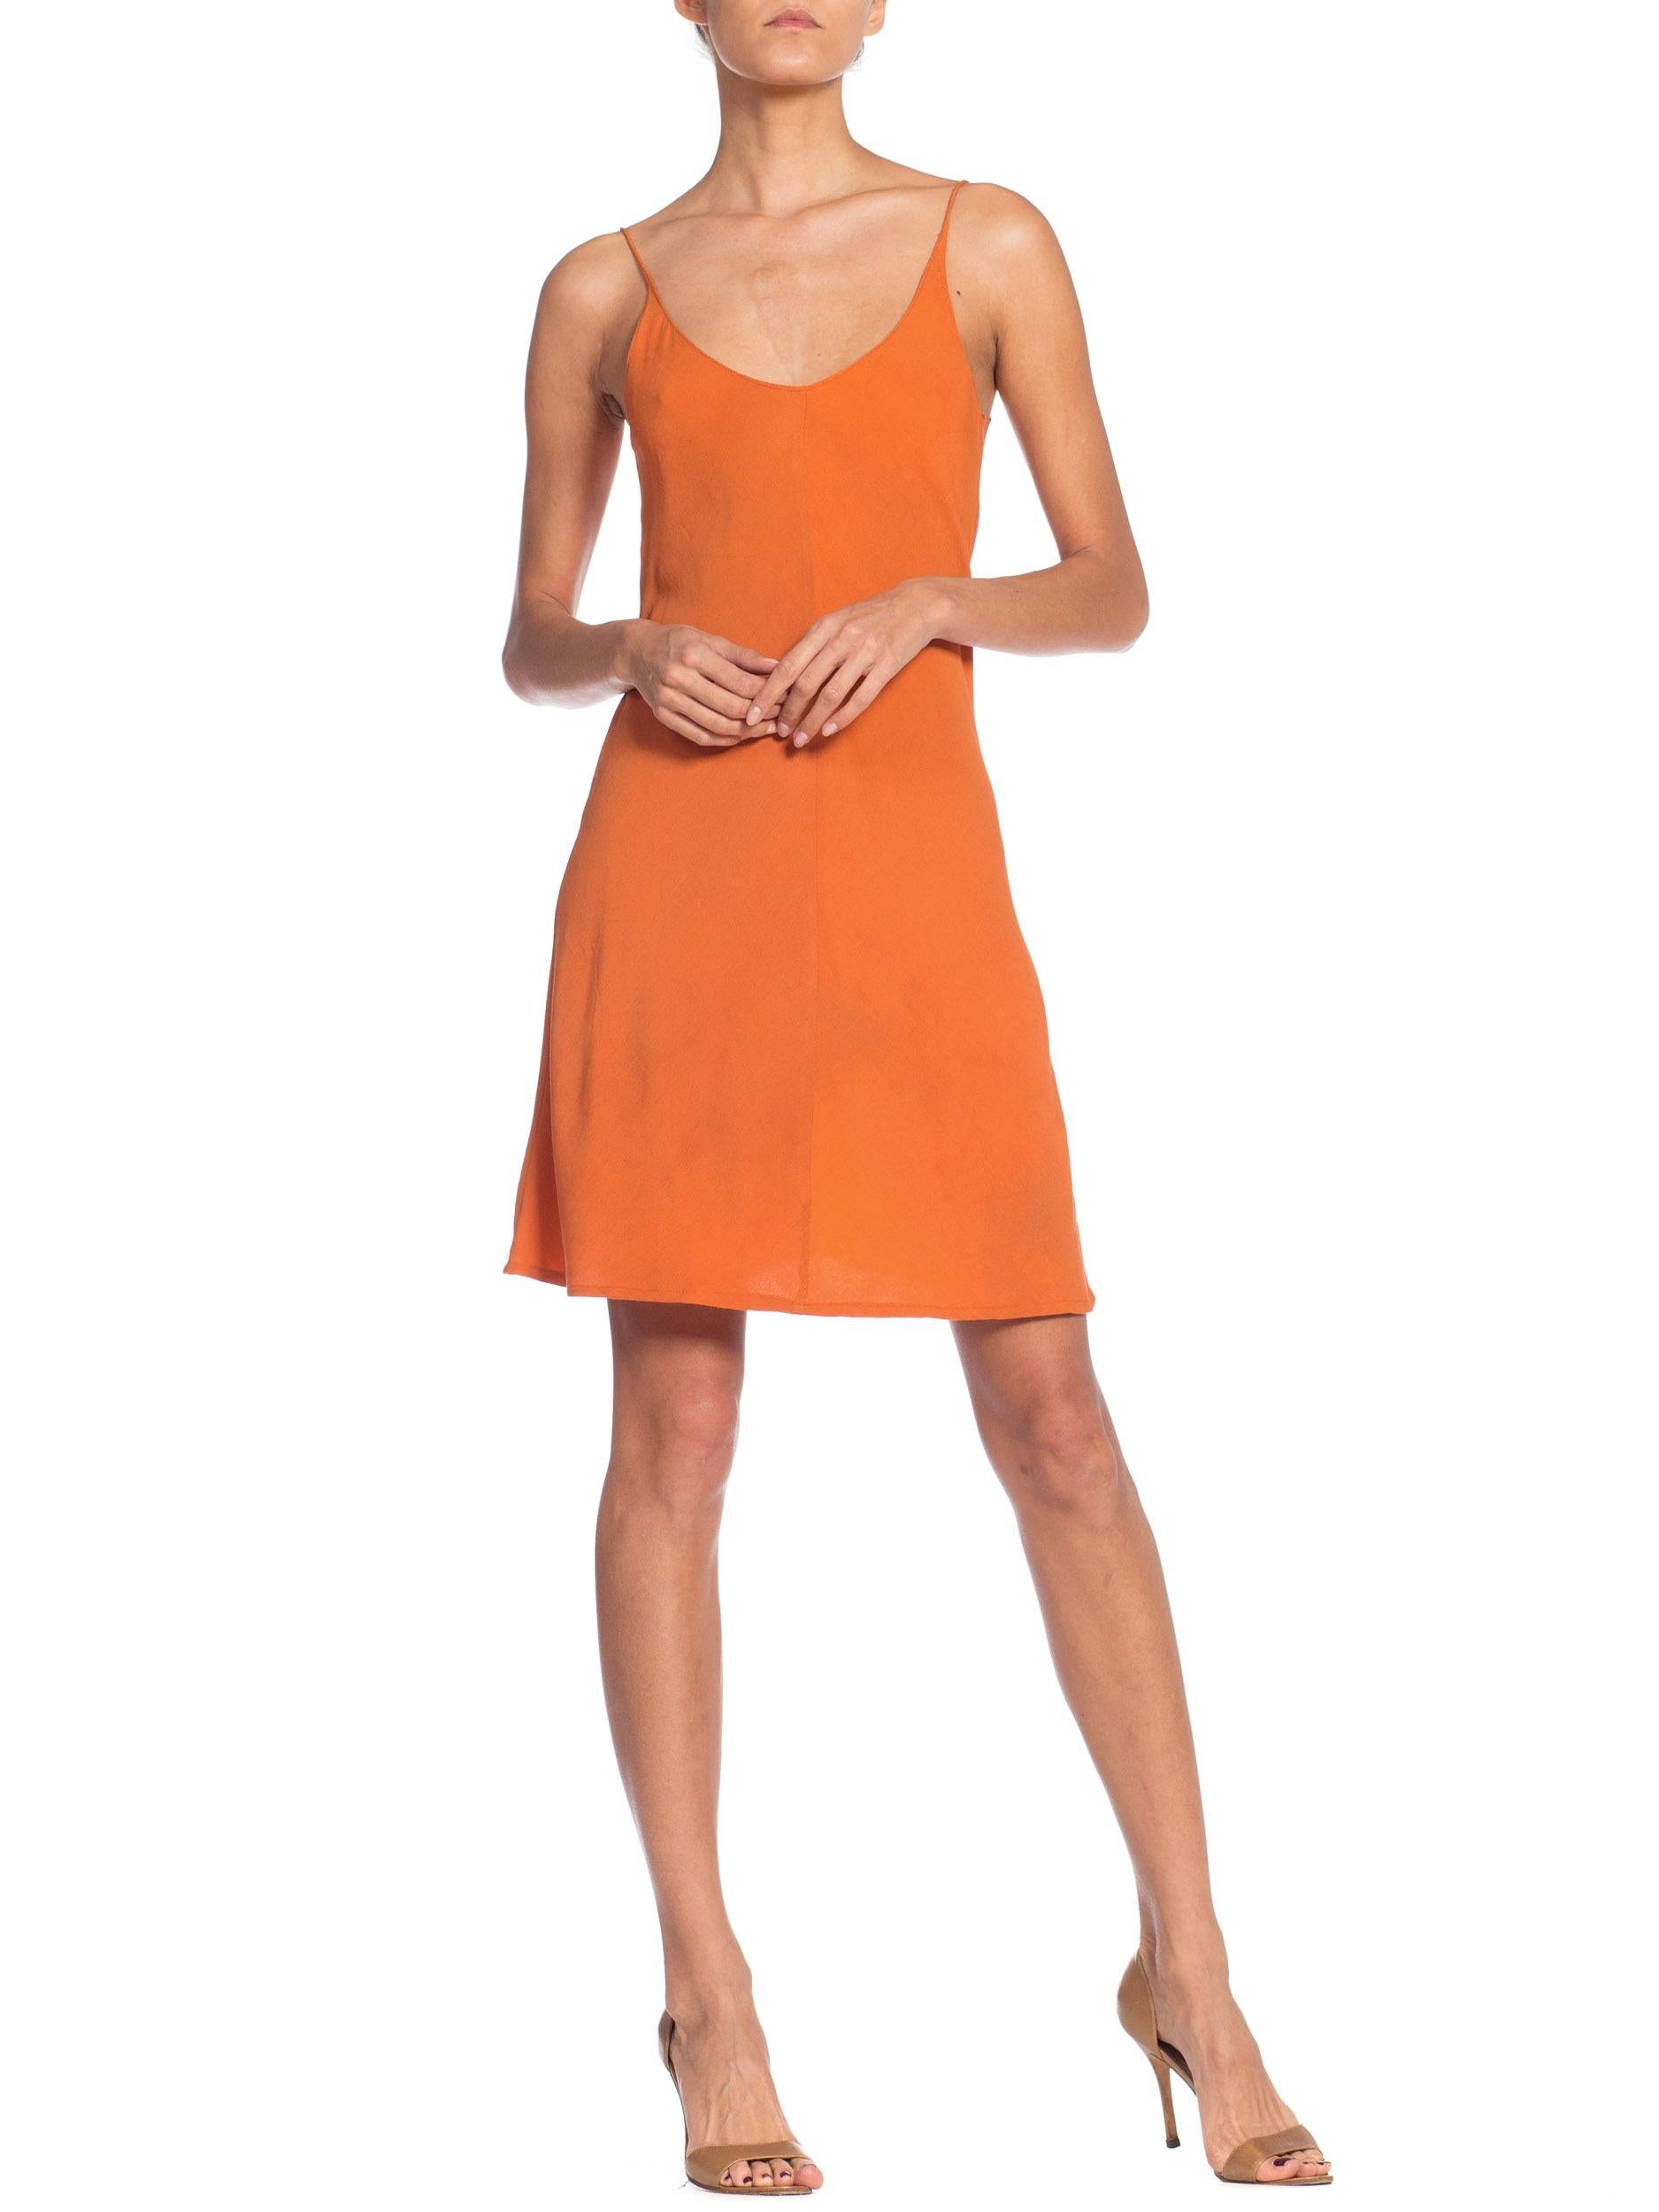 Women's 1990s Alicia Mugetti Orange Bias Slip Dress